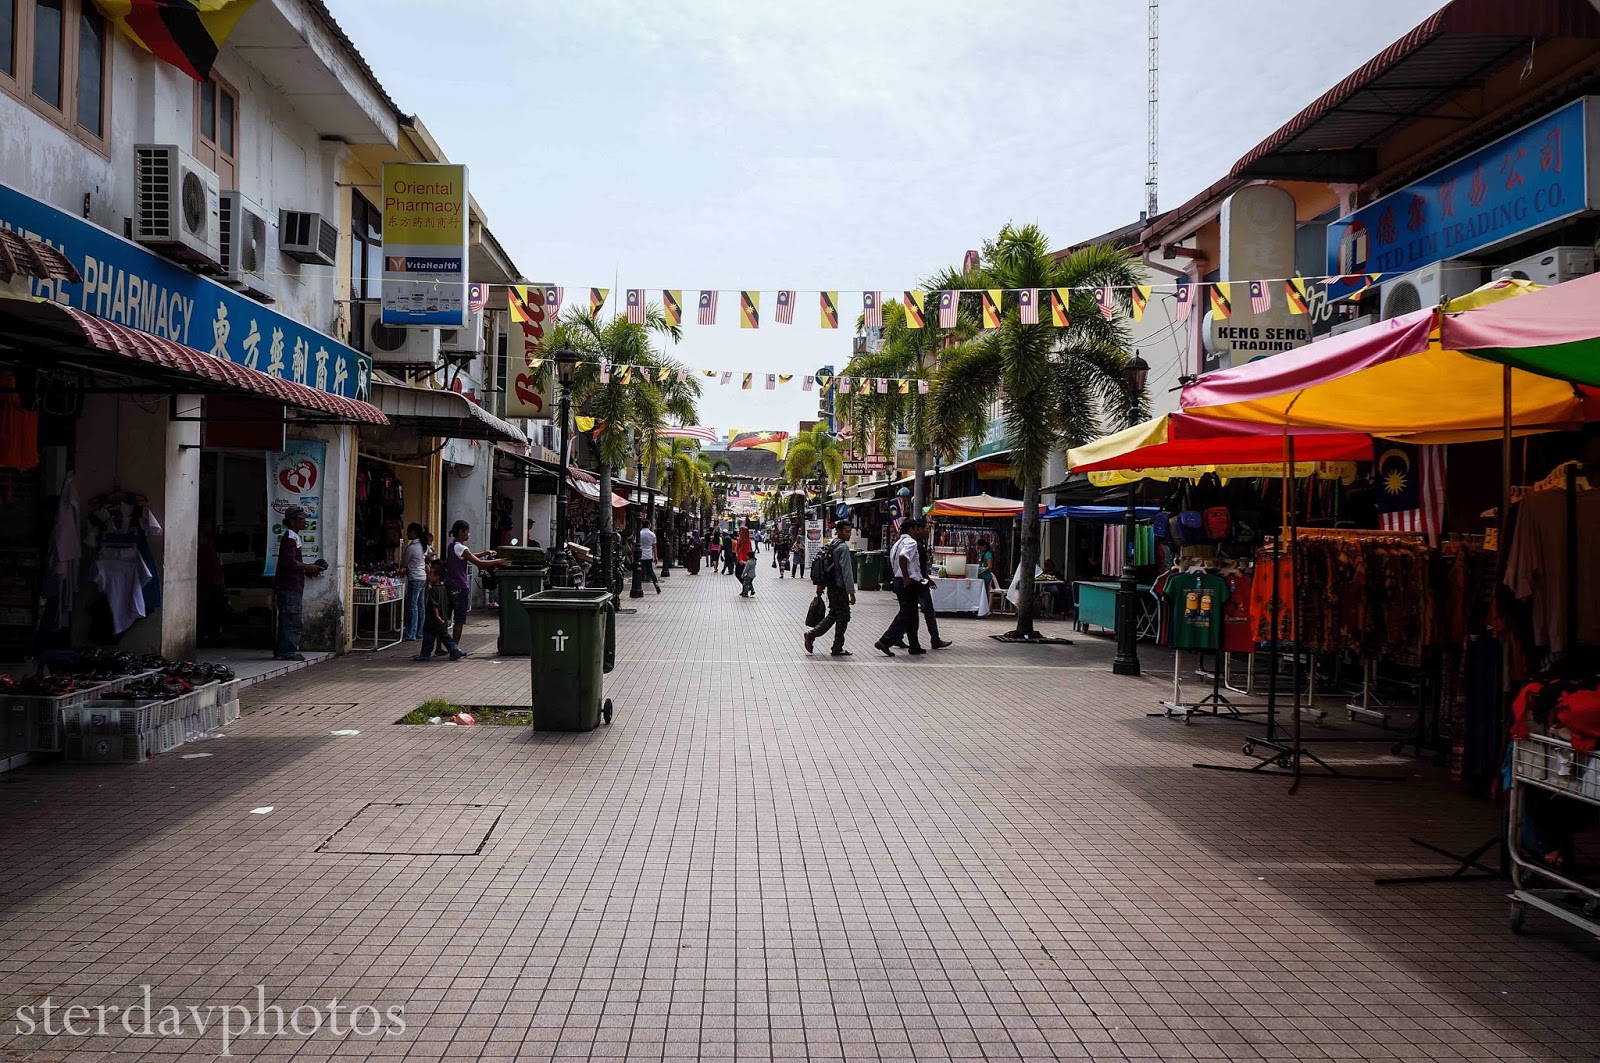 Sterdavblog: Walks In Kuching